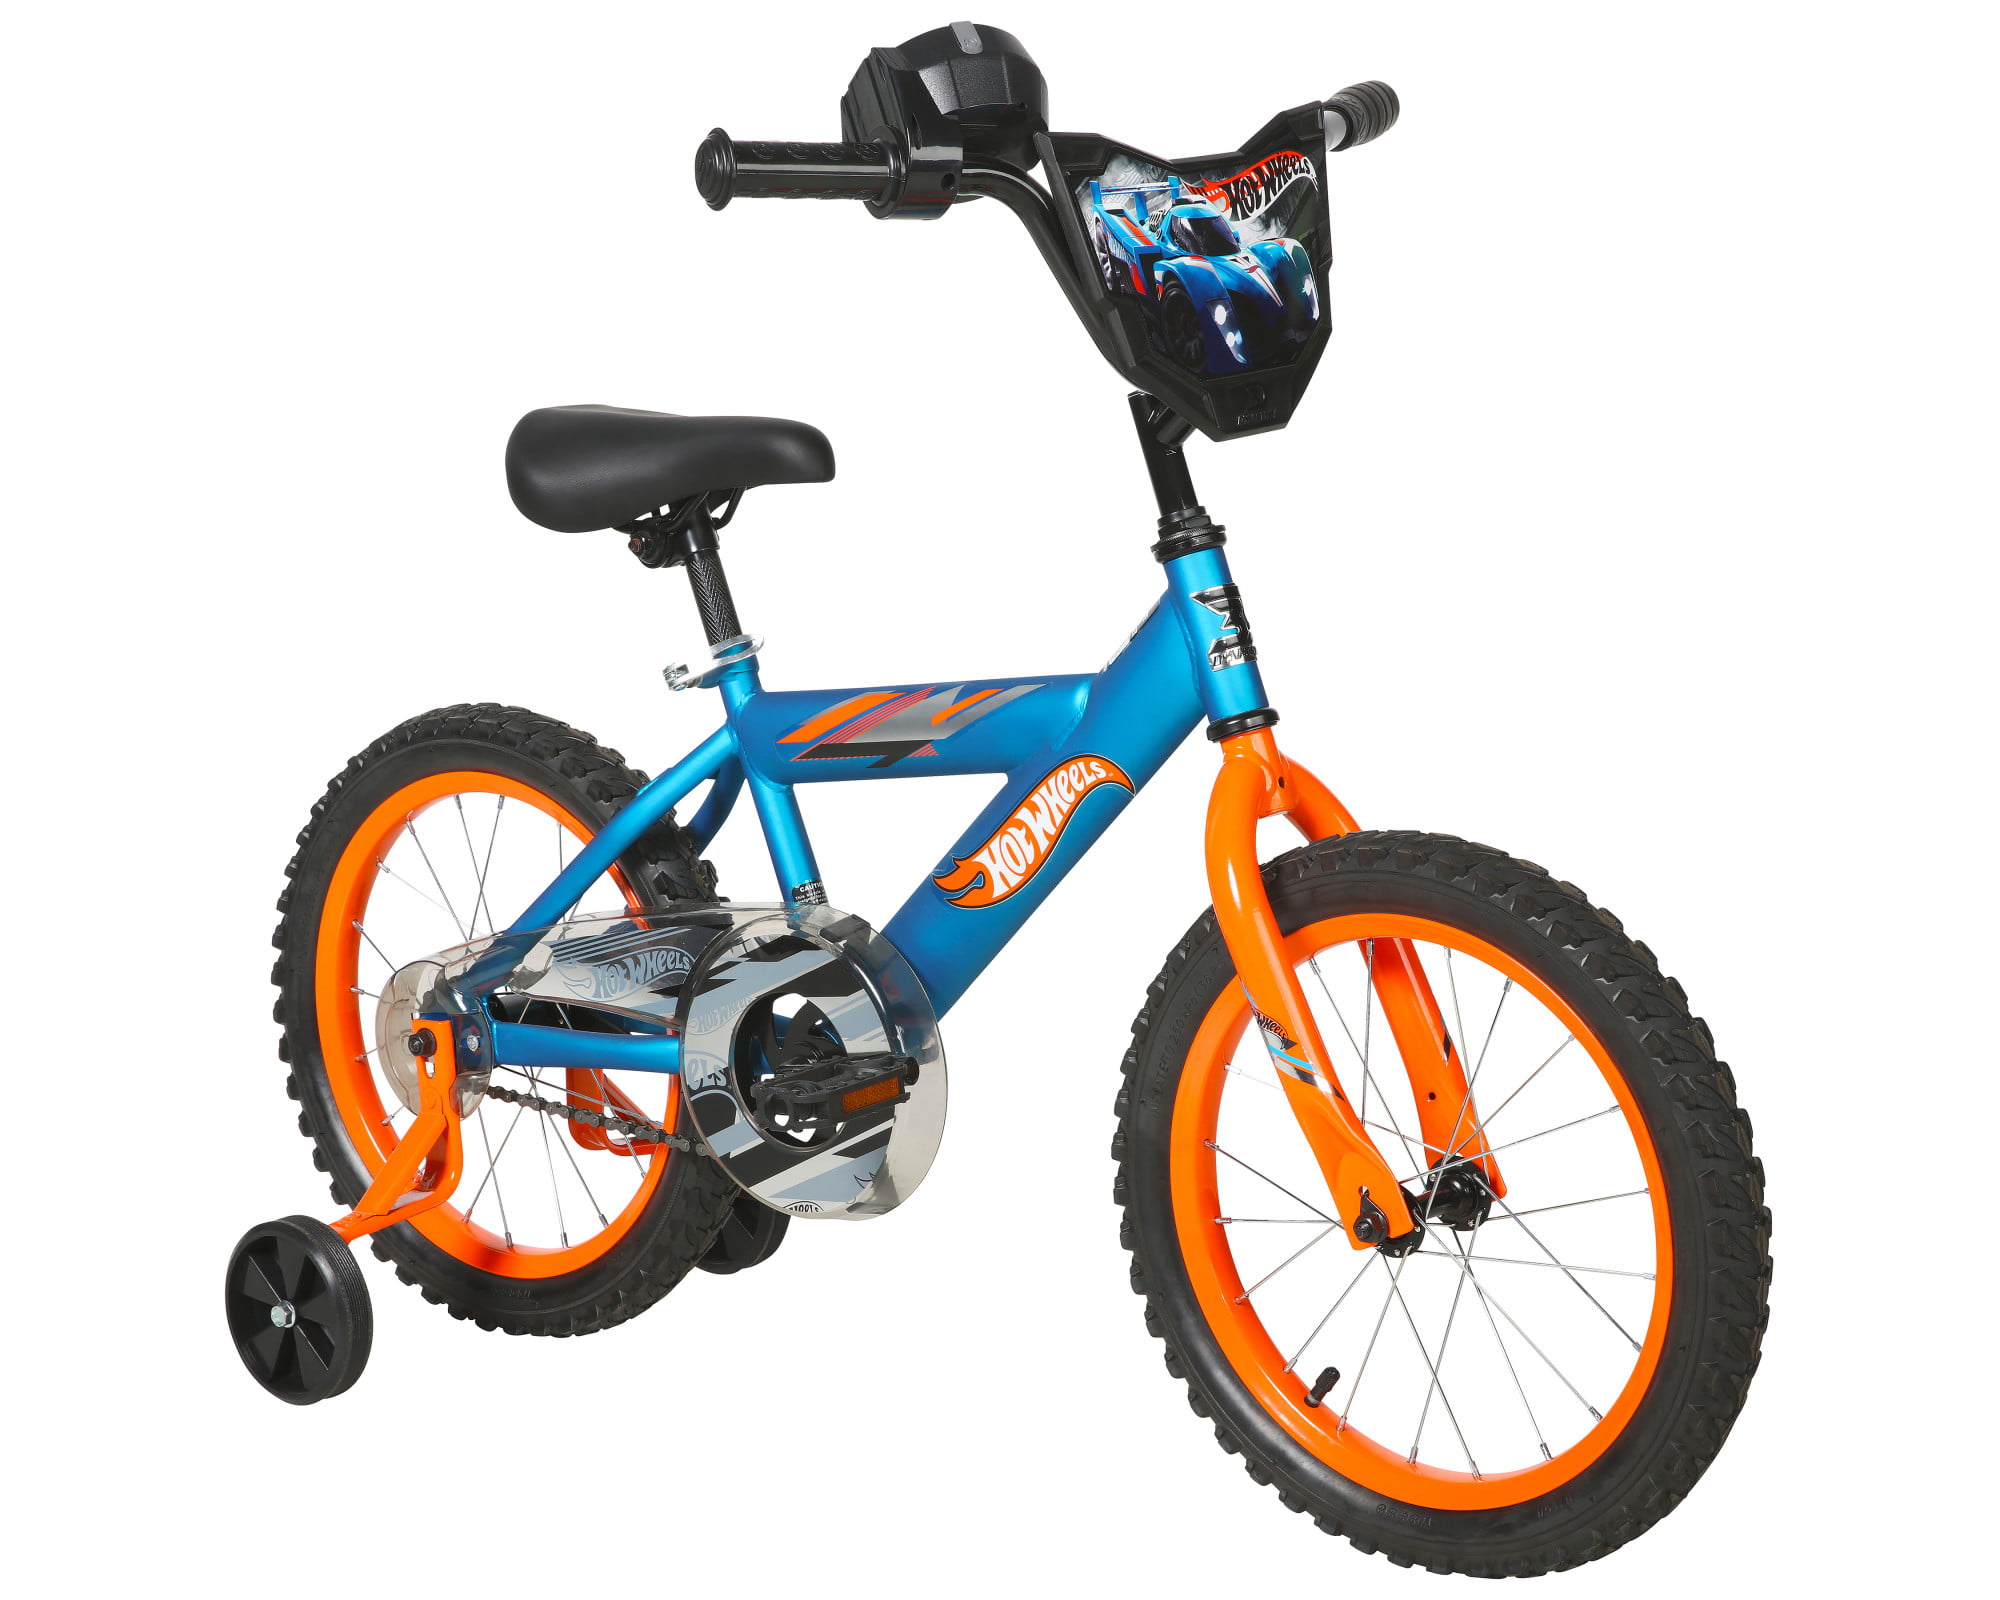 Dynacraft Hot Wheels 16-inch Boys BMX Bike For Children 5-7 years - image 1 of 12